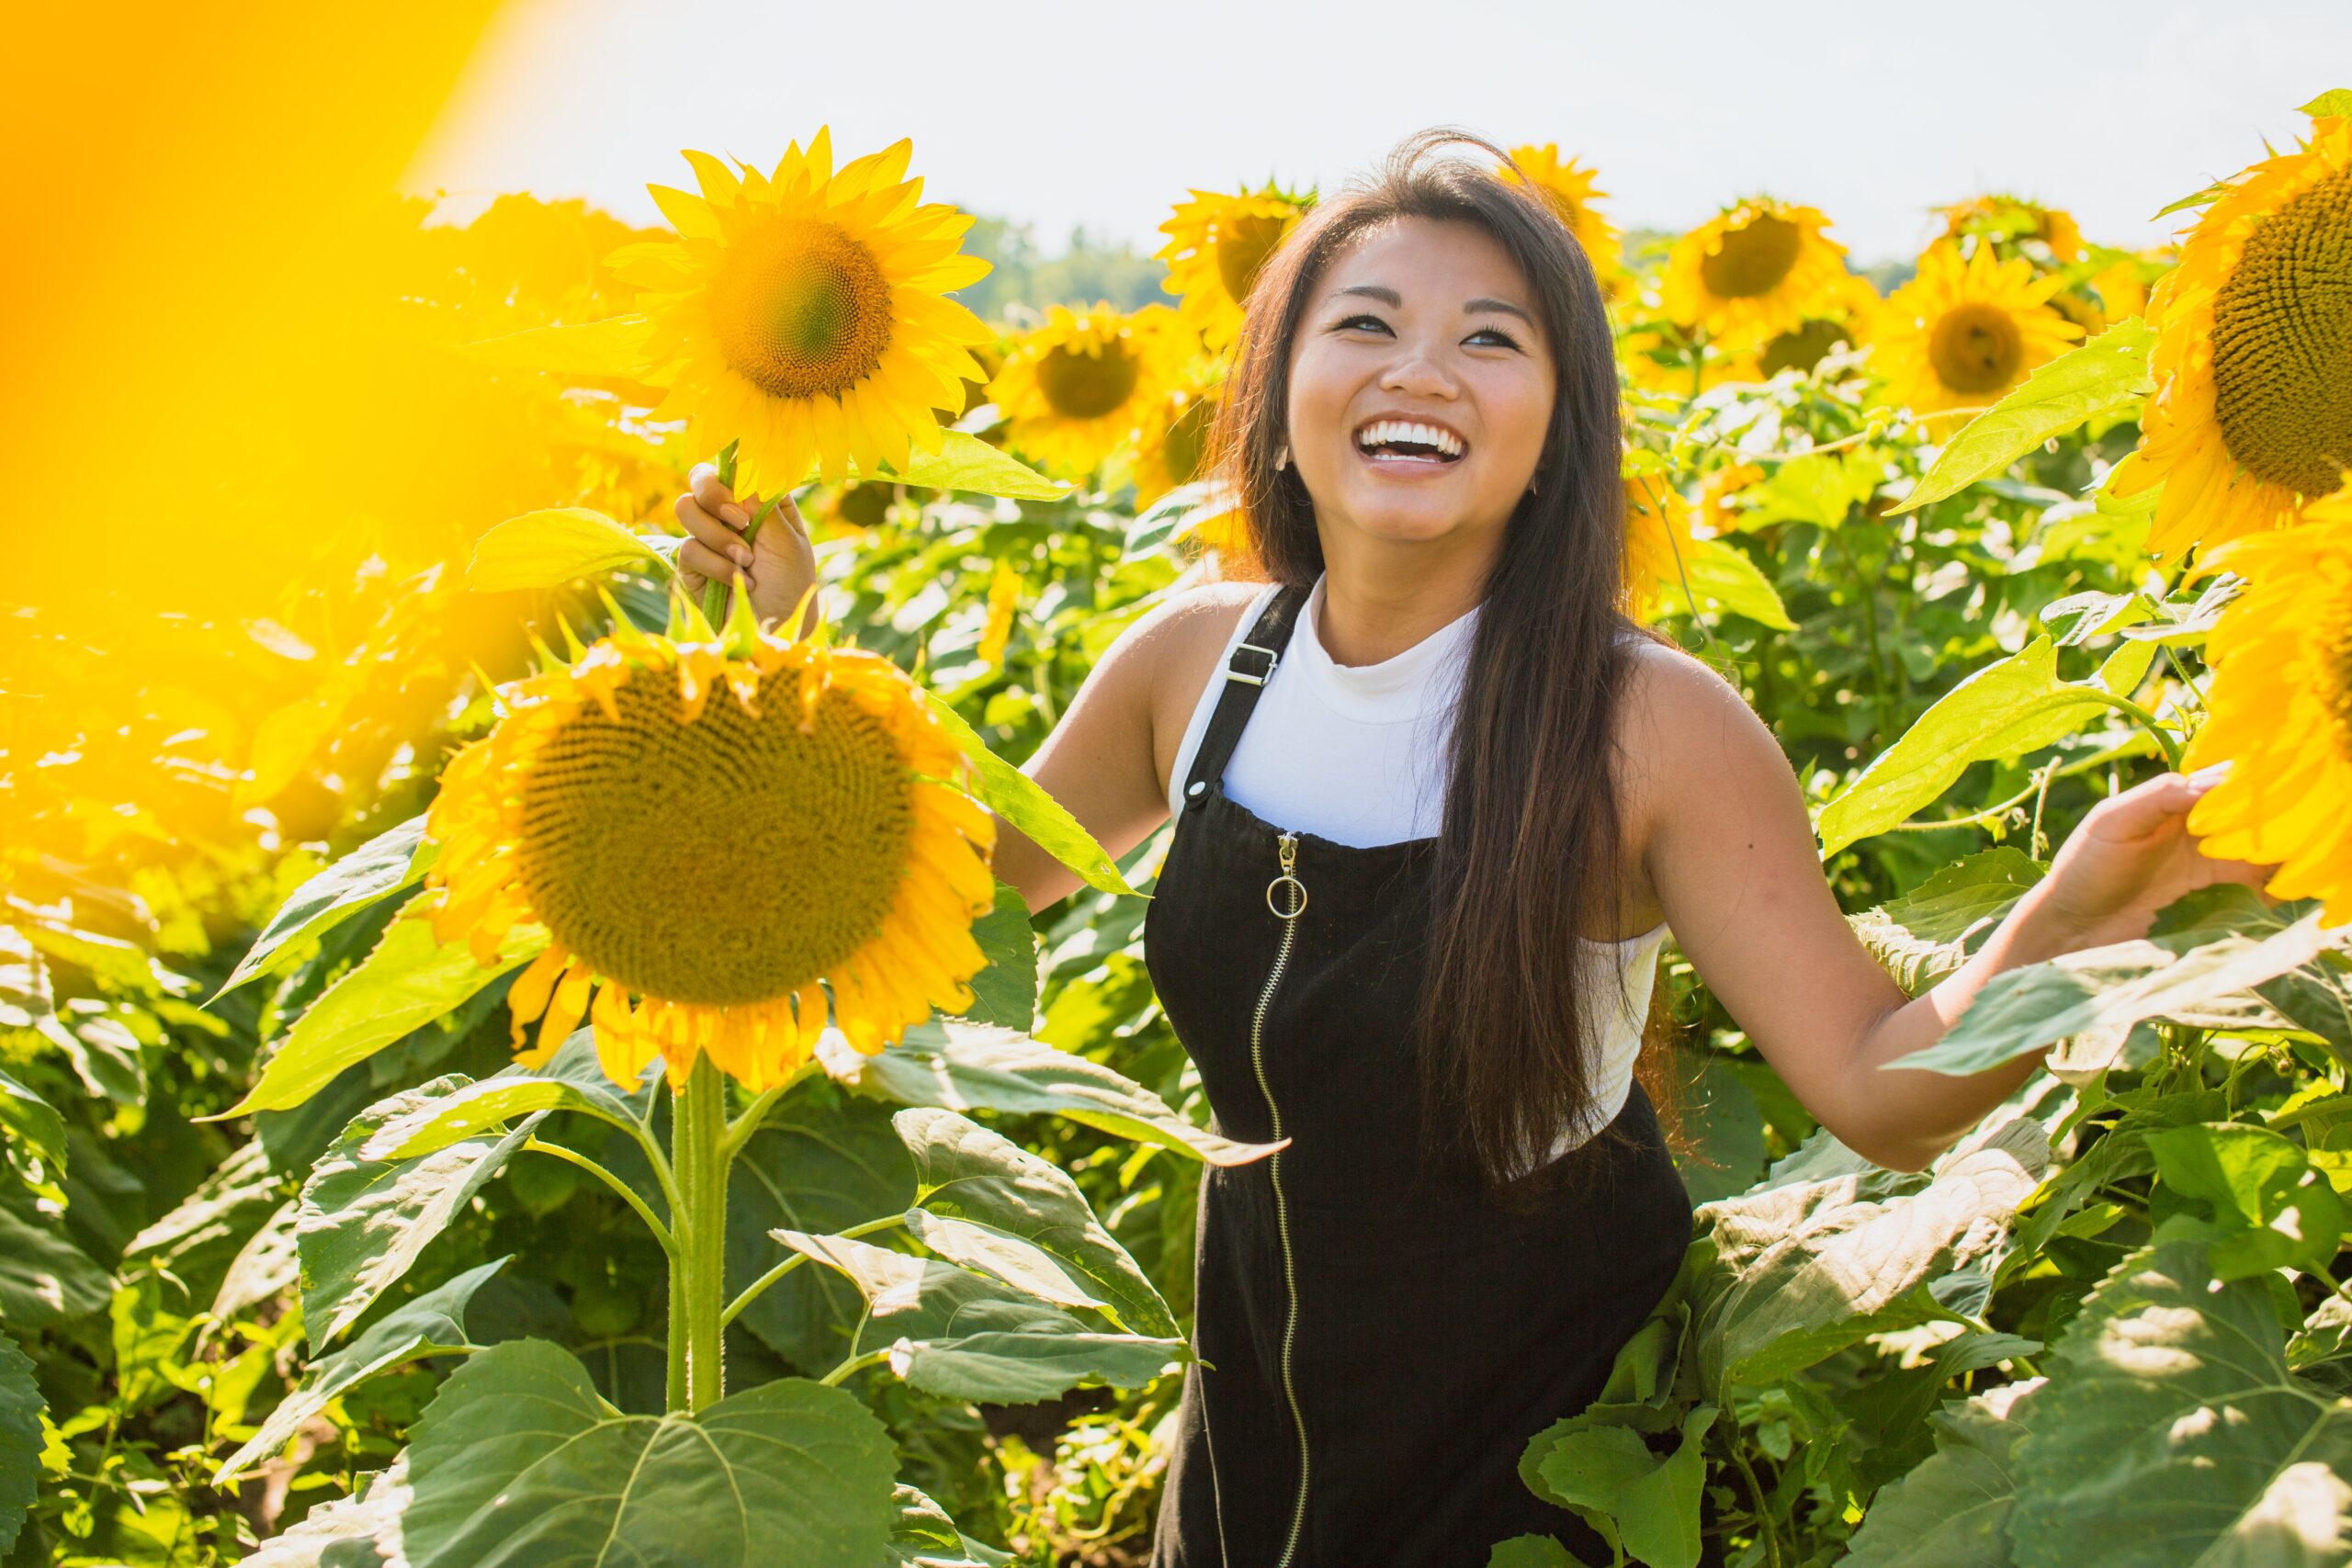 Joyful Woman surrounded by sunflowers